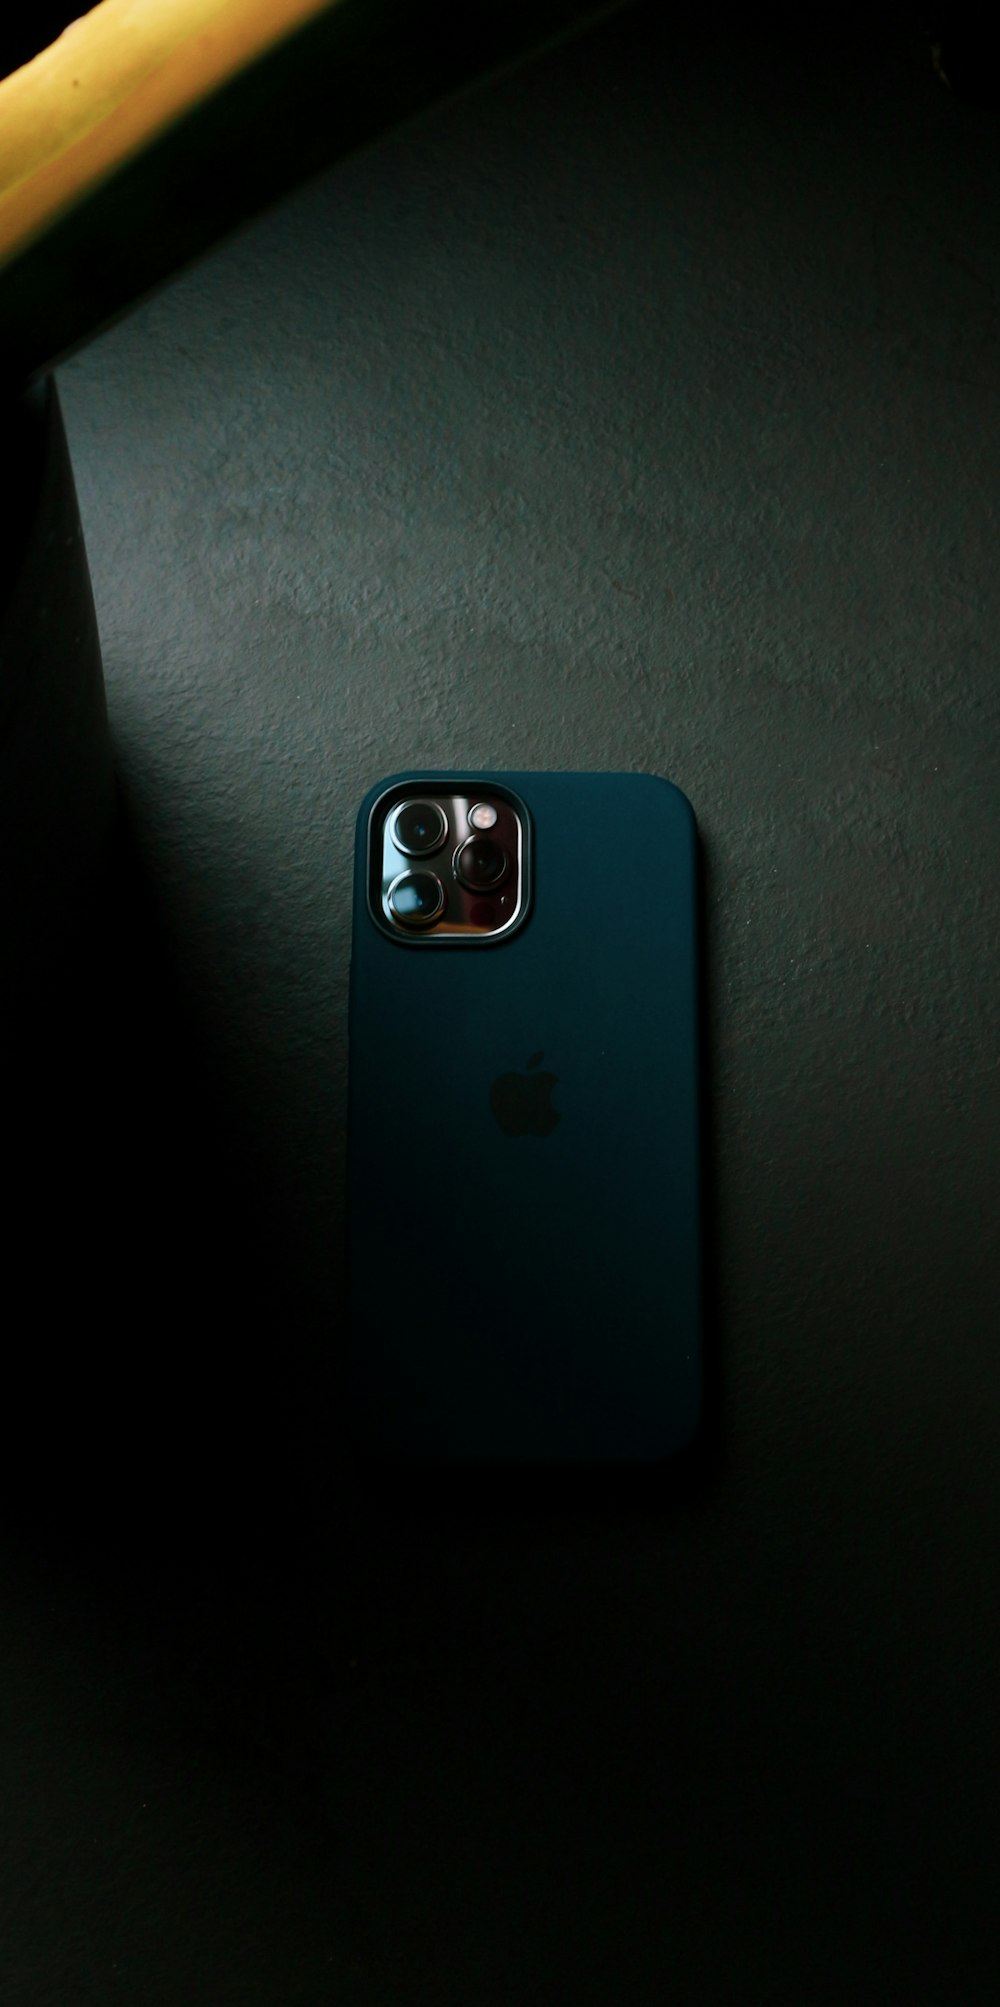 Custodia per iPhone blu su tessuto grigio